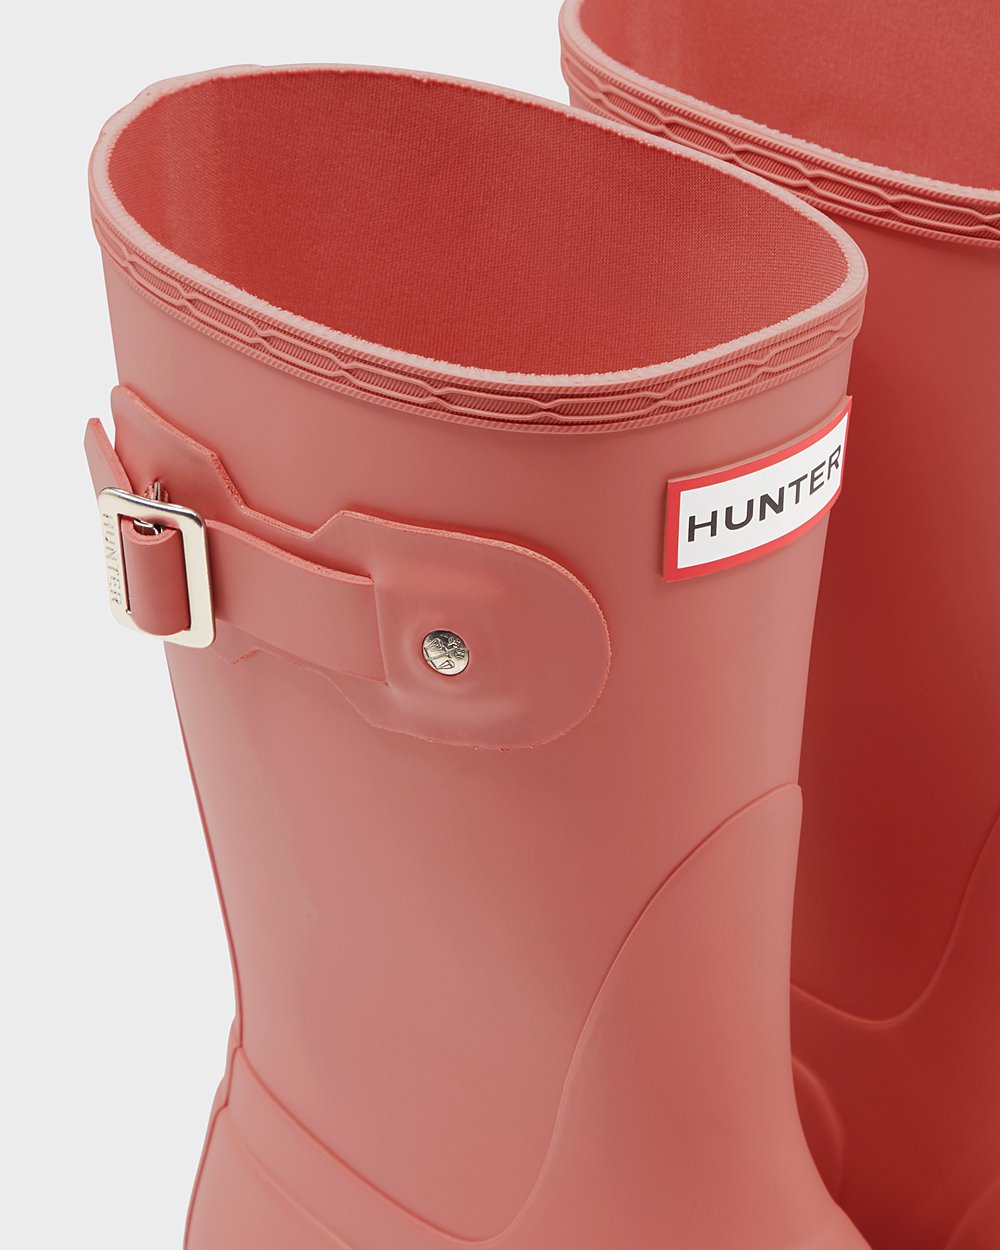 Womens Short Rain Boots - Hunter Original (15QWOJPDU) - Pink